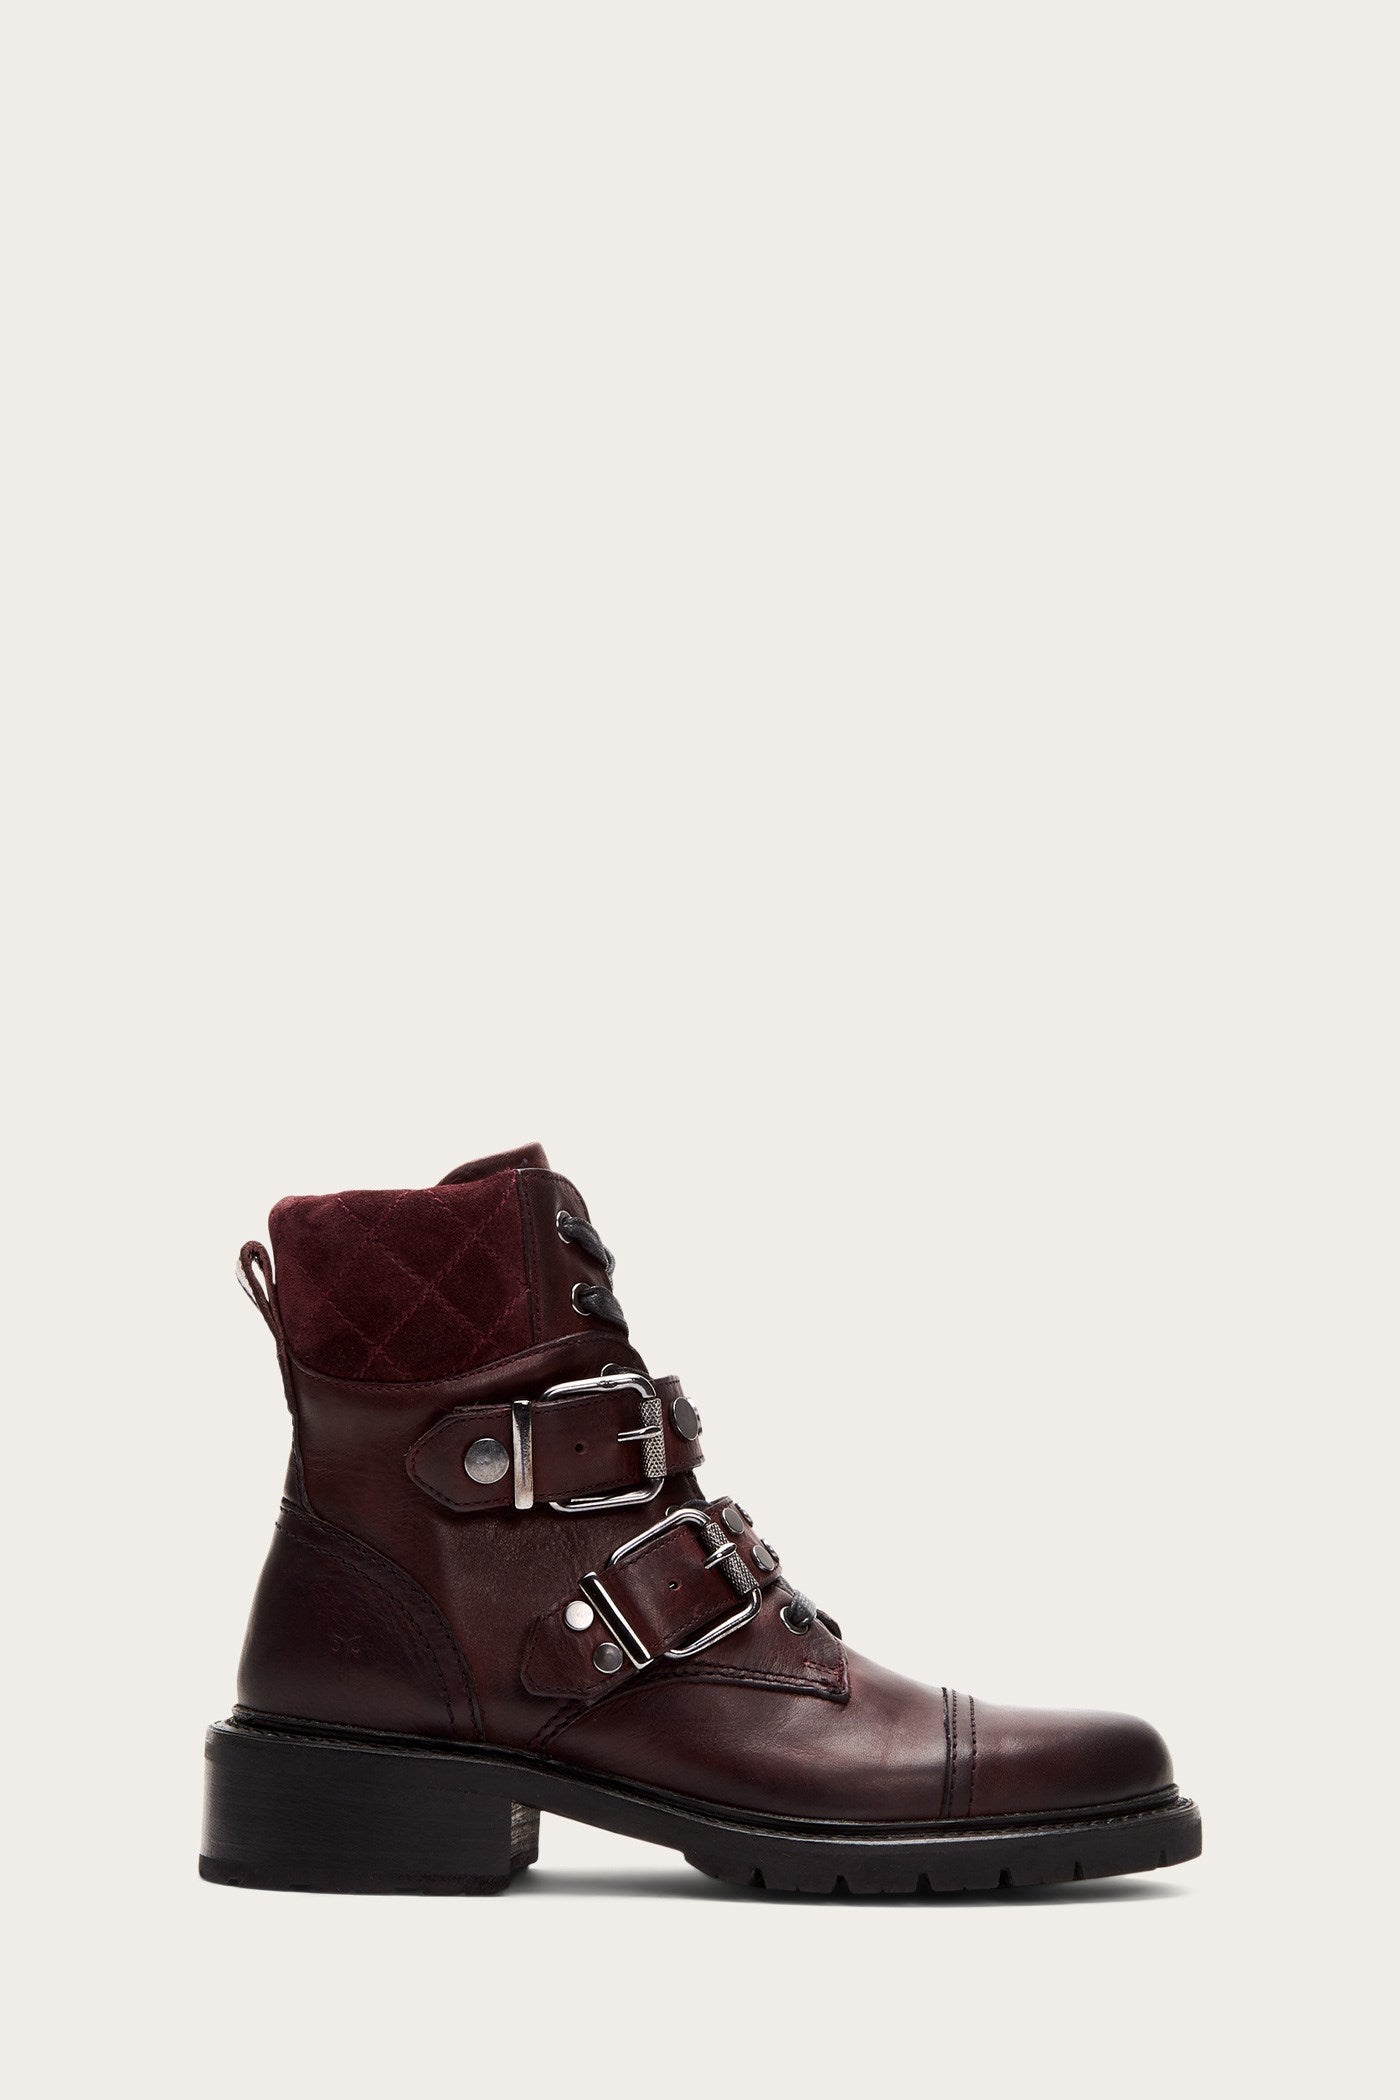 plum coloured boots